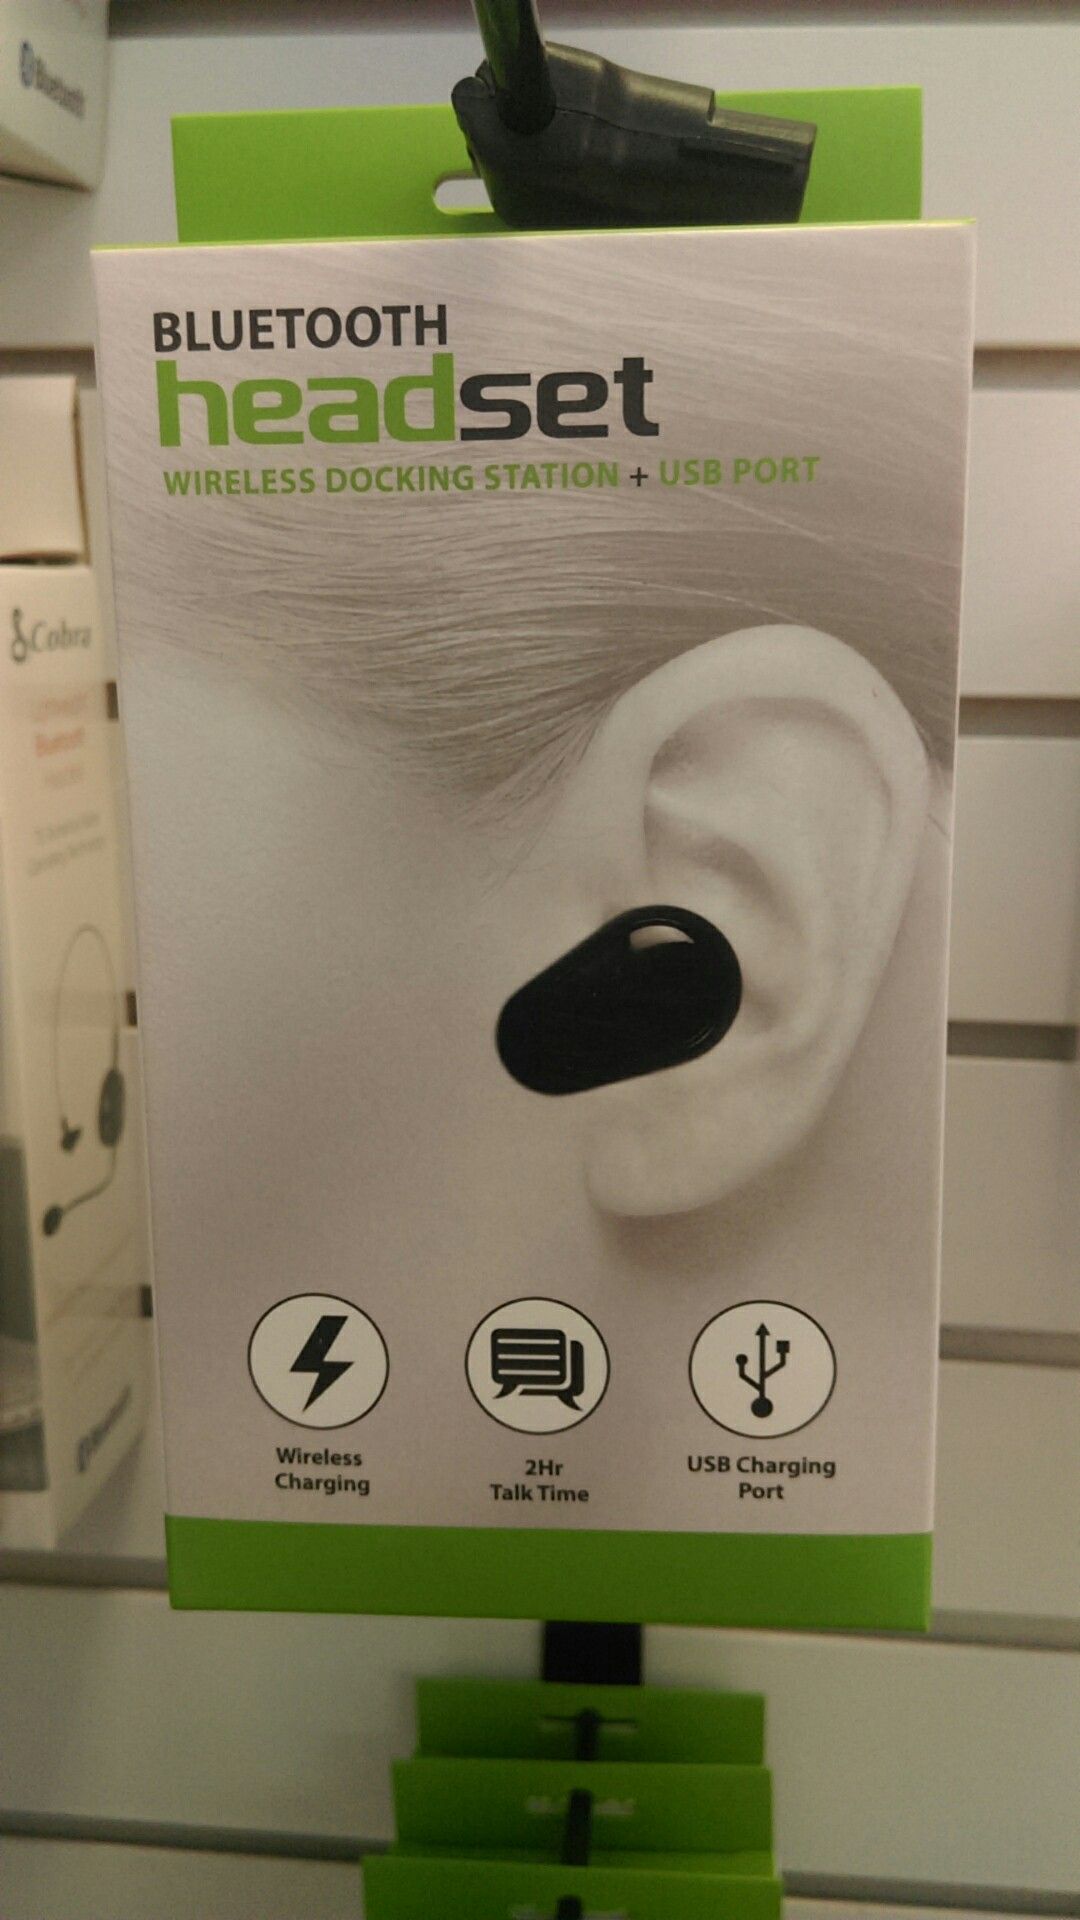 Bluetooth headset Wireless docking station plus USB port